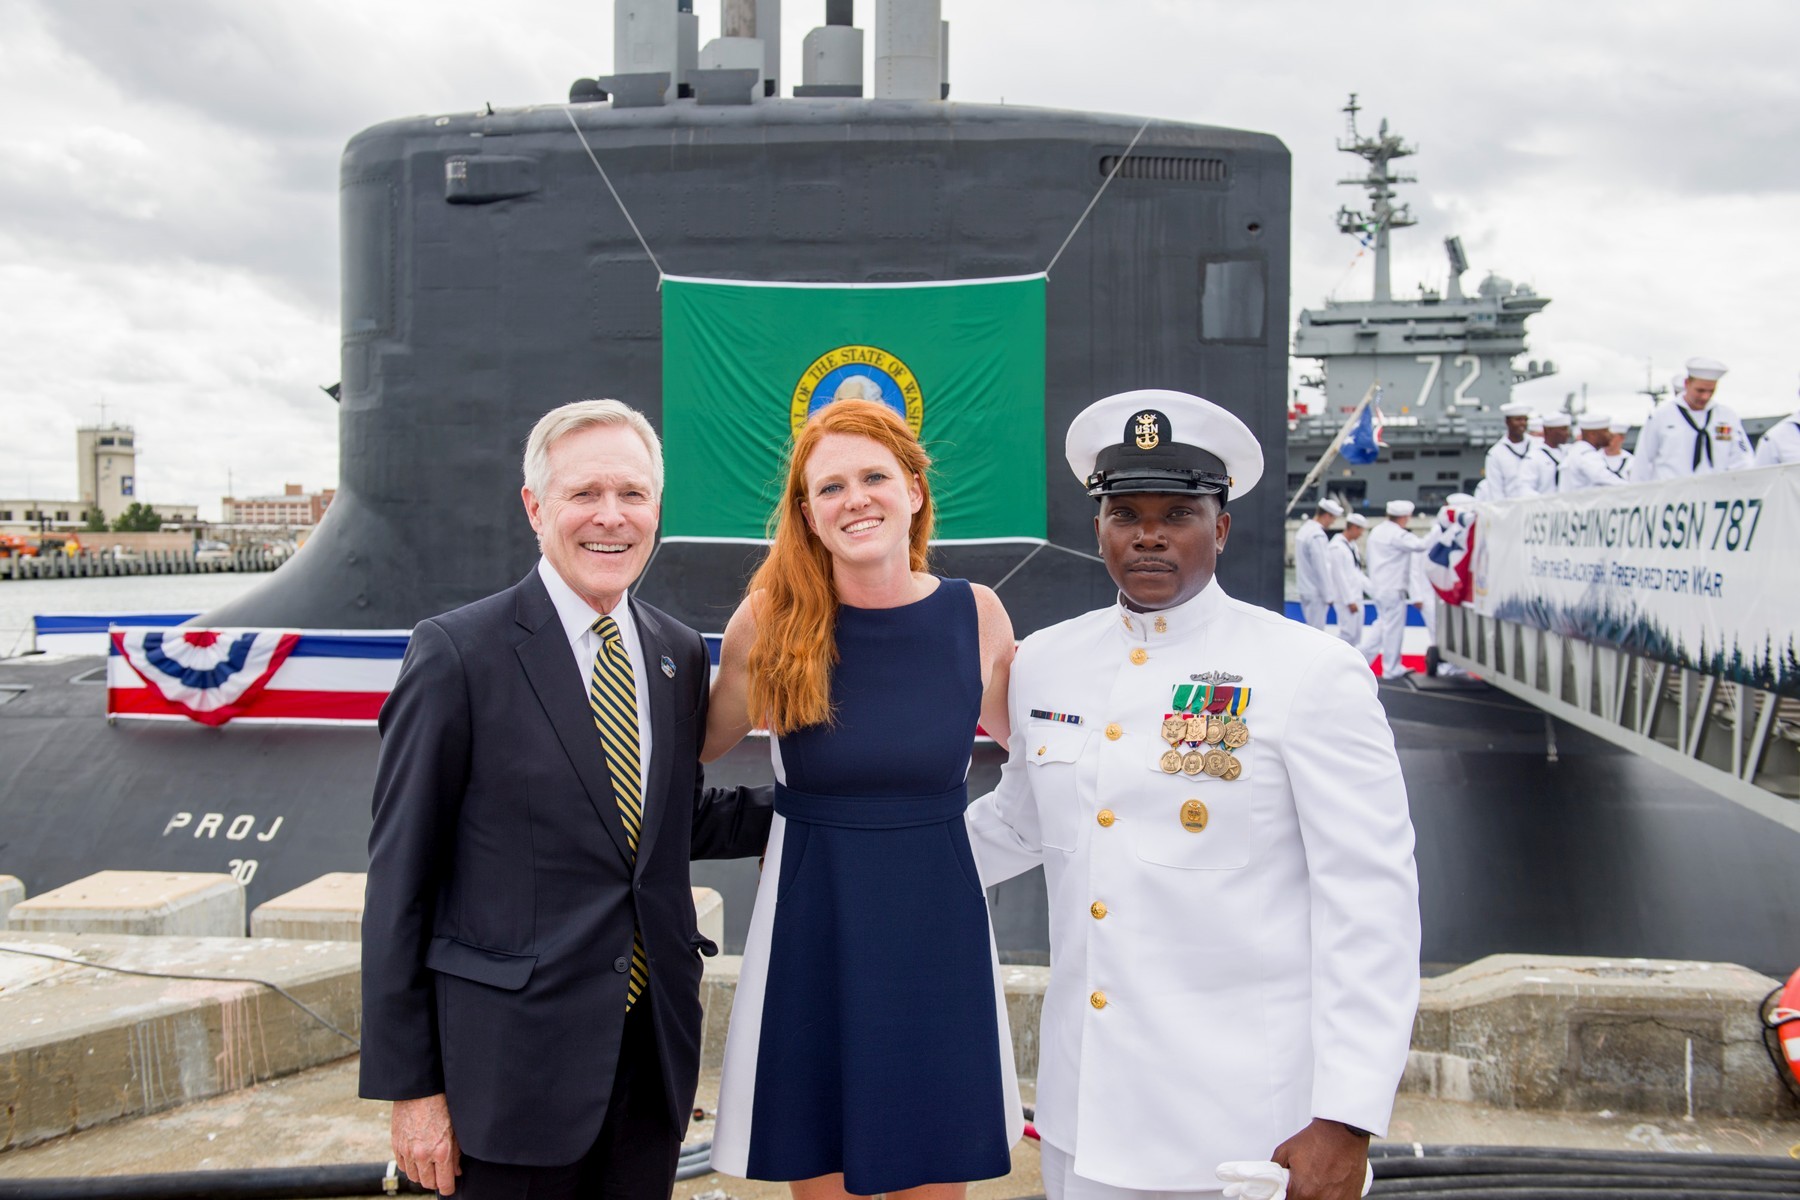 ssn-787 uss washington virginia class attack submarine us navy commissioning ceremony norfolk 03 elisabeth mabus sponsor